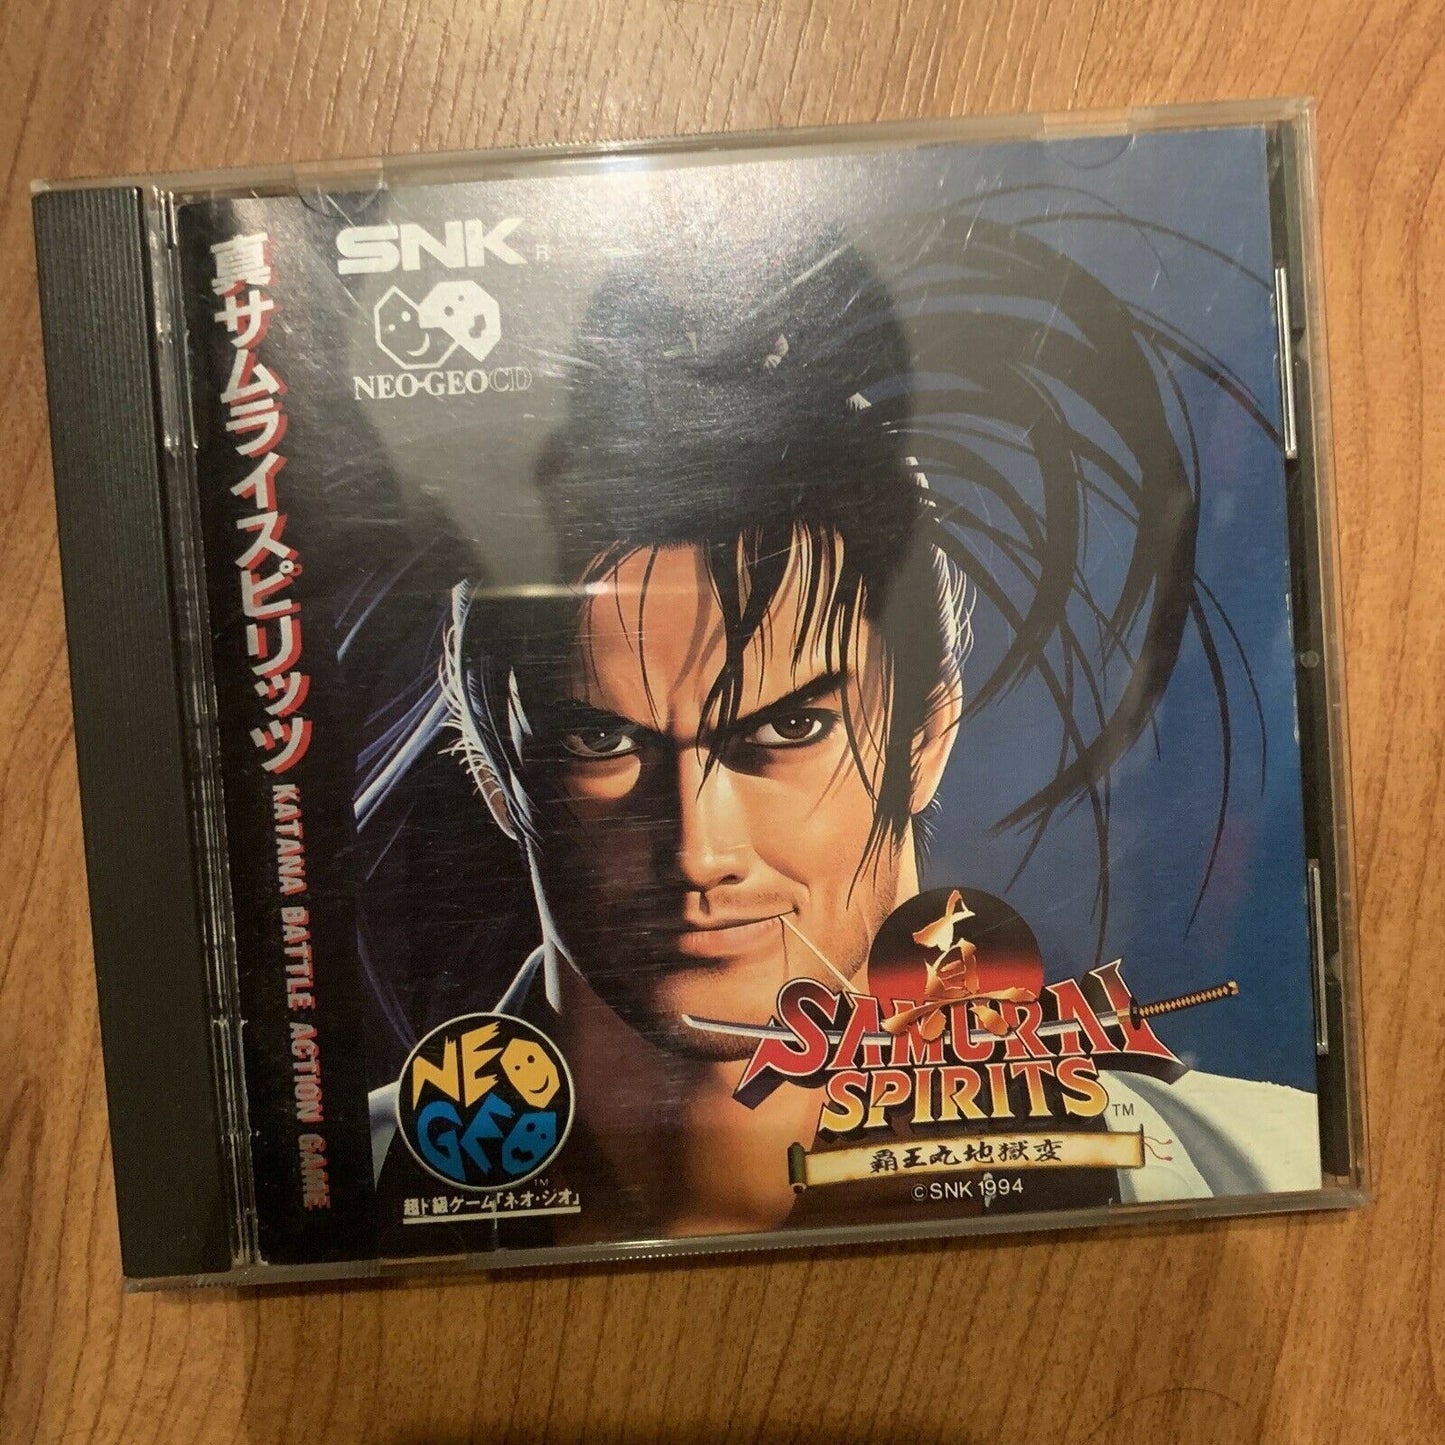 SNK Neo Geo CD Japan Console w/ Samurai Spirits, Controller, Power Supply & AV